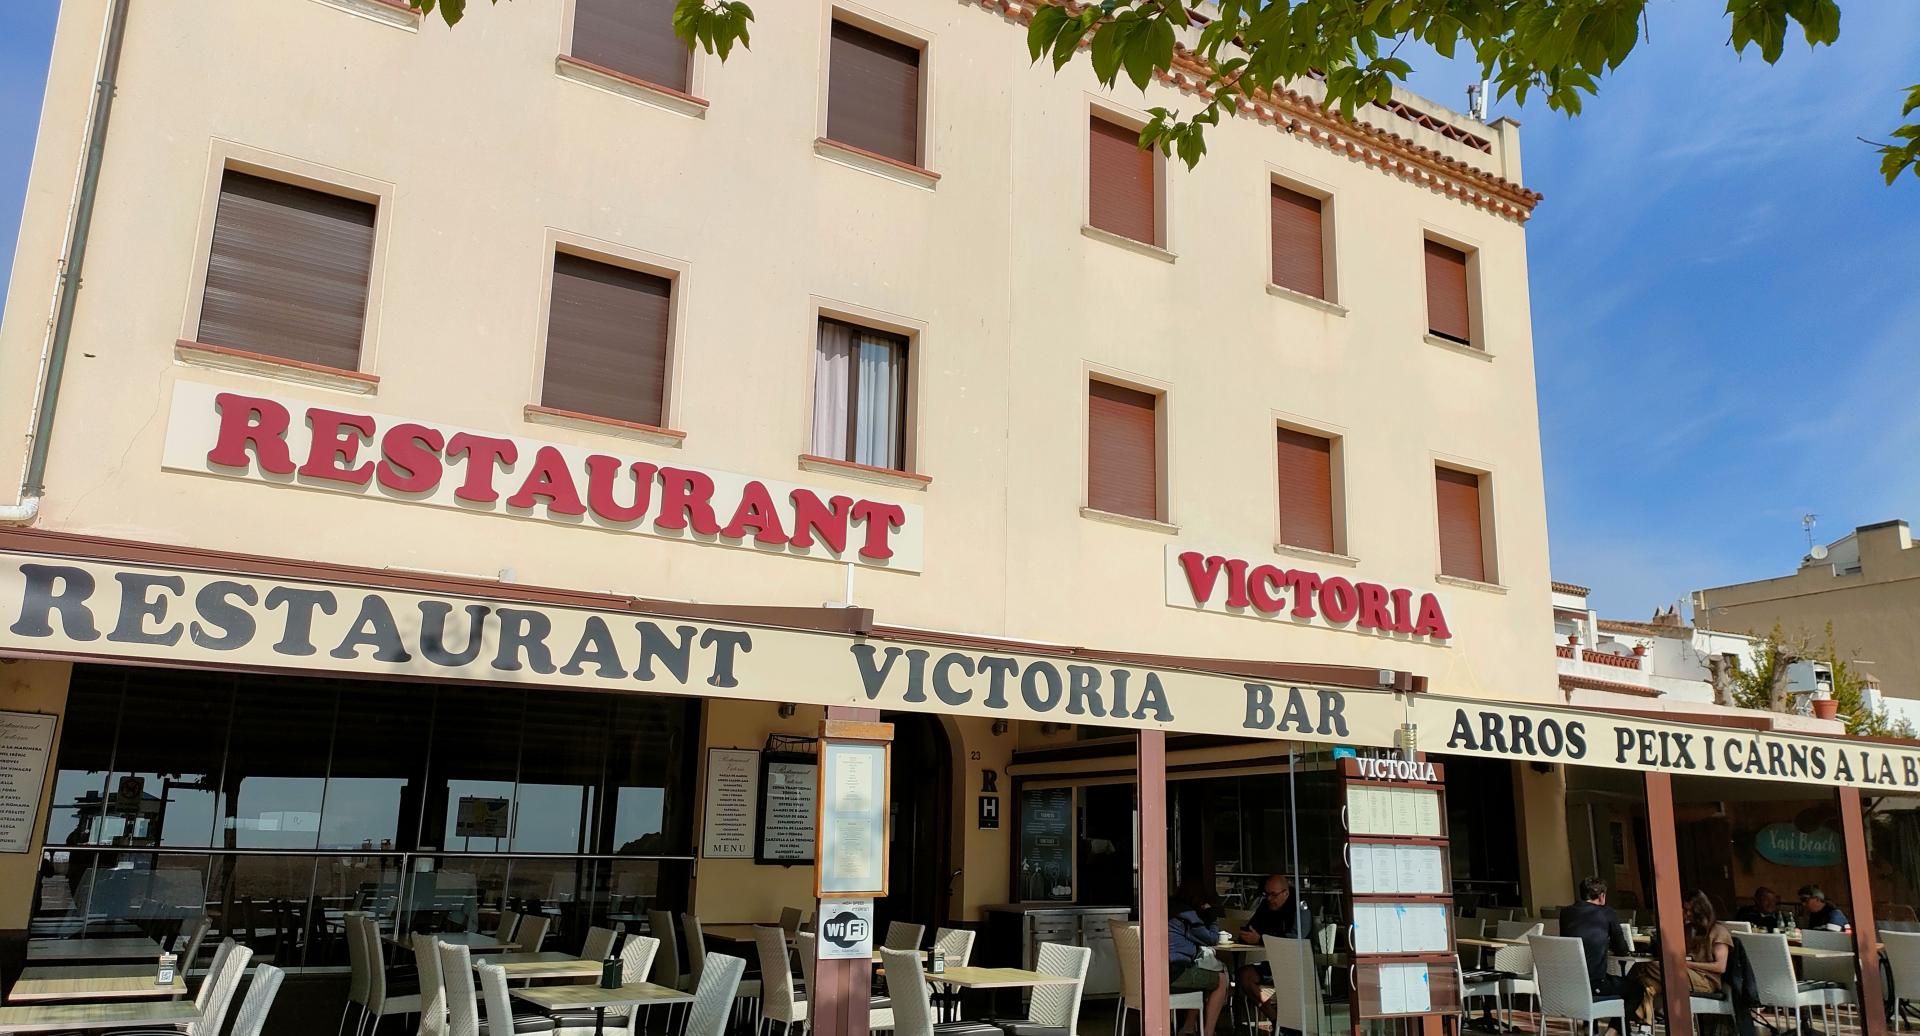 Contact Hotel Restaurant Victoria